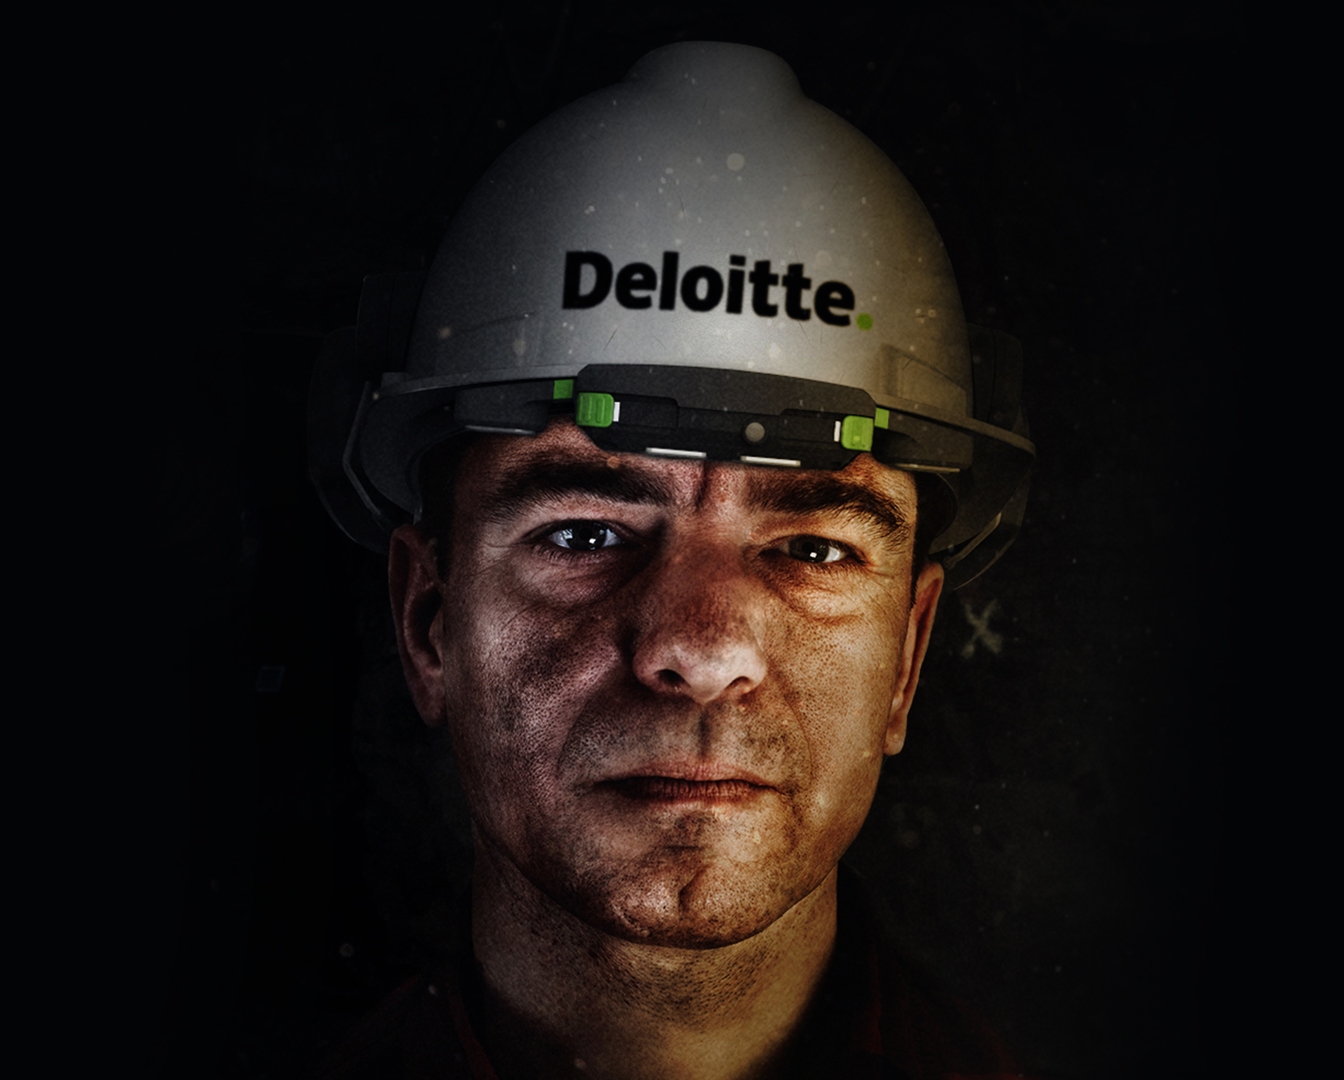 Deloitte Smart Helmet Clip